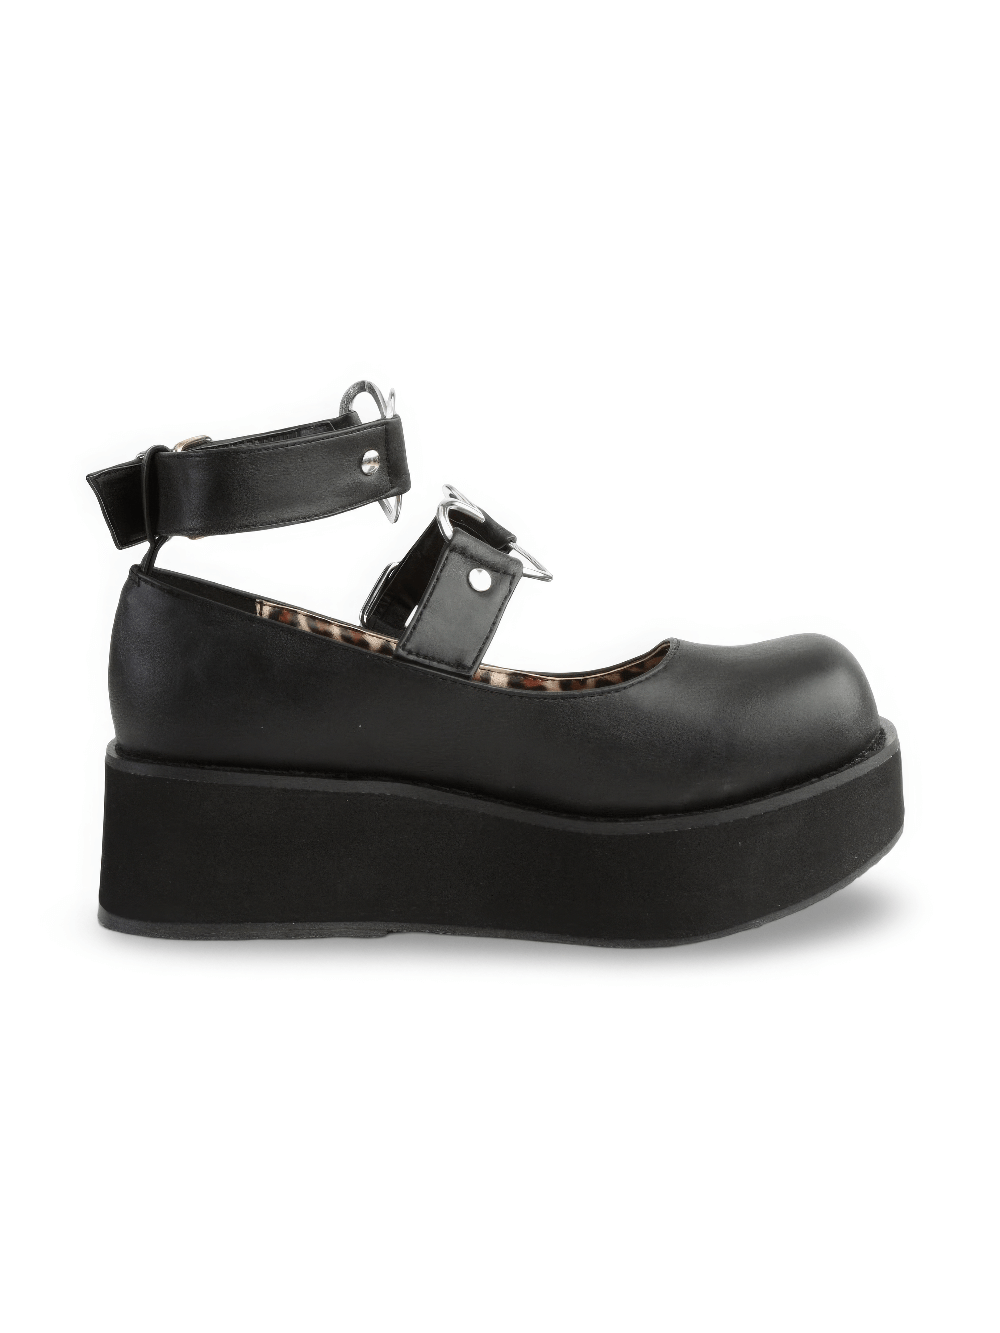 DEMONIA Black Platform Mary Jane Shoes with Heart O-Rings